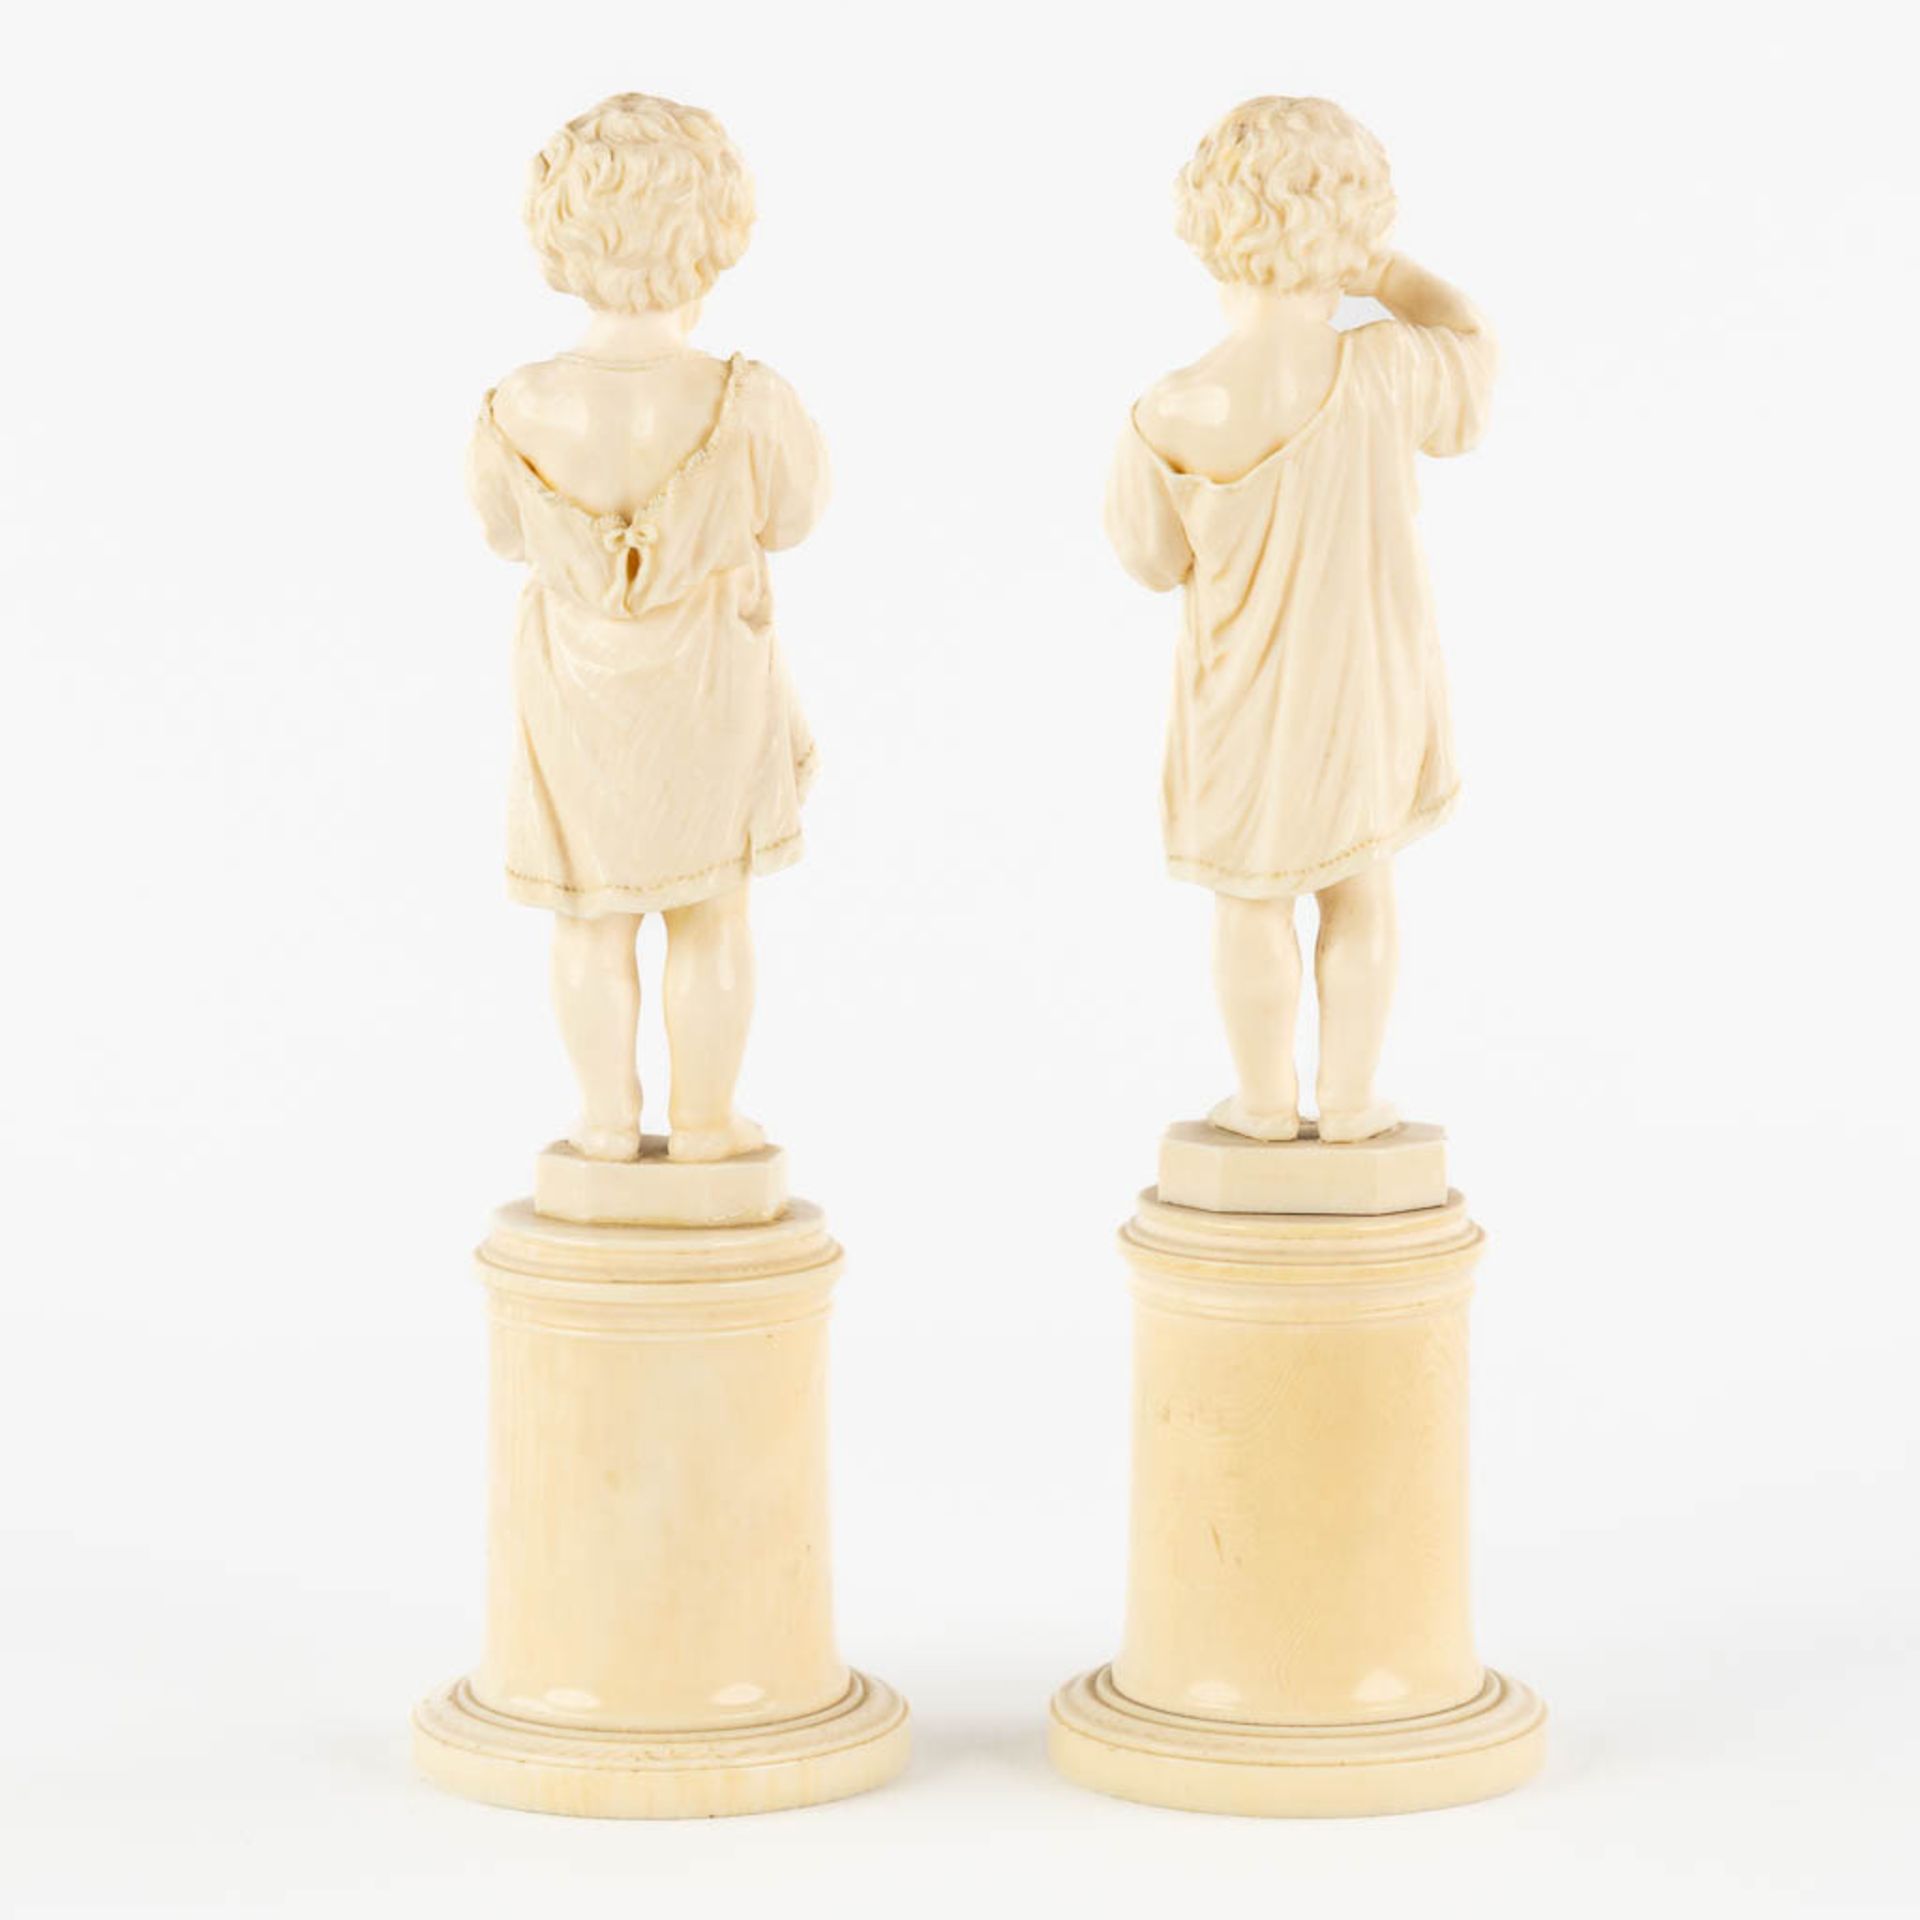 A pair of fine sculptures of Children, Ivory, Germany or Austria. 19th C. (H:19,5 x D:6 cm) - Bild 4 aus 10